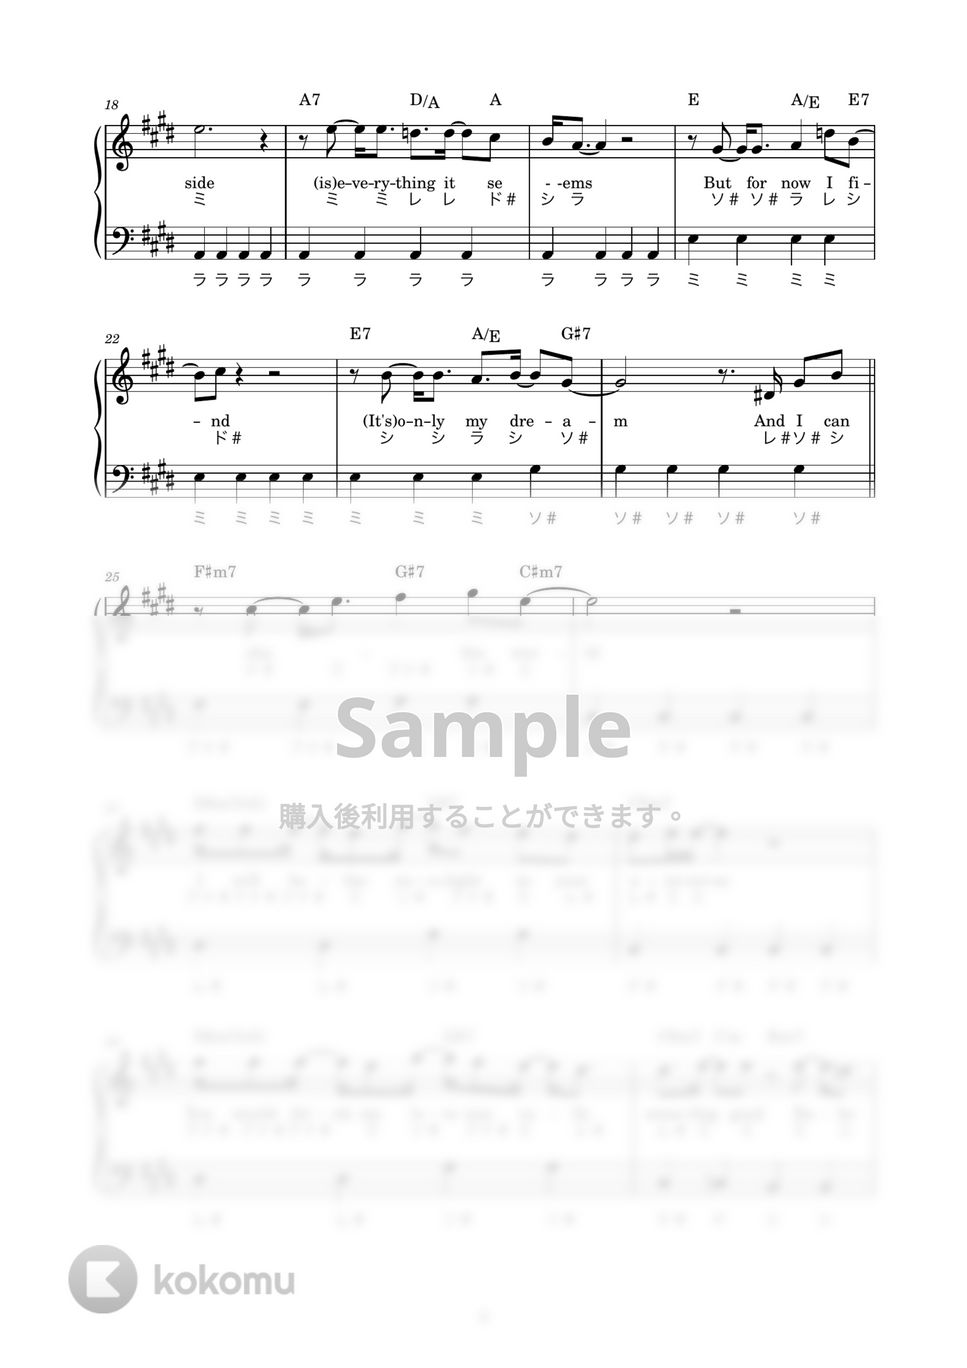 Eric Clapton - Change the World (かんたん / 歌詞付き / ドレミ付き / 初心者) by piano.tokyo